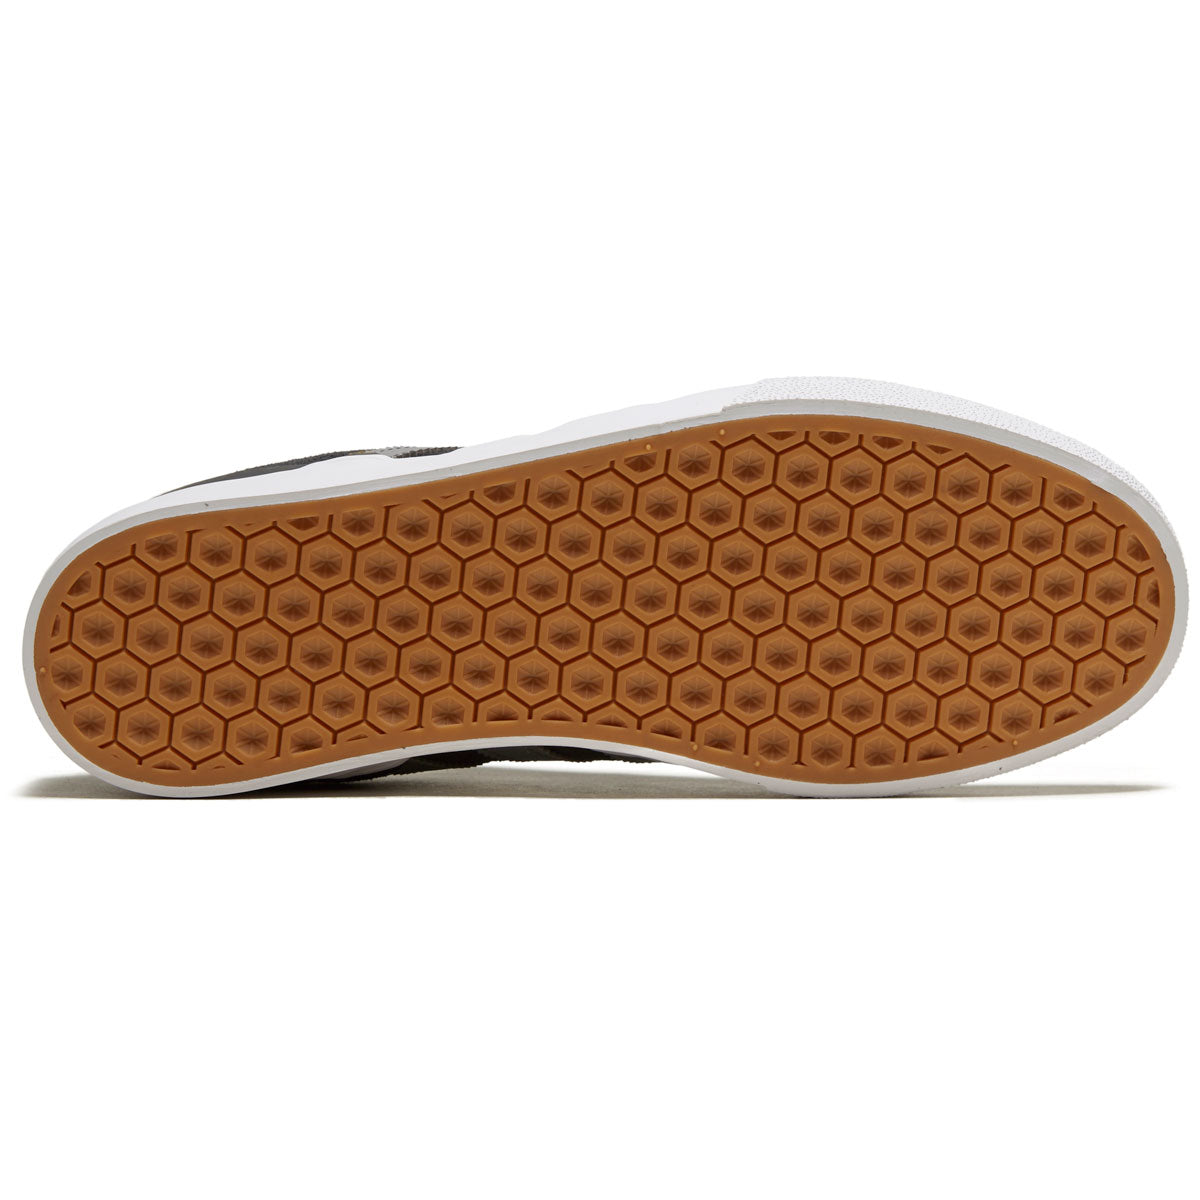 Adidas Busenitz Vulc II Shoes - Carbon/Grey/White image 4